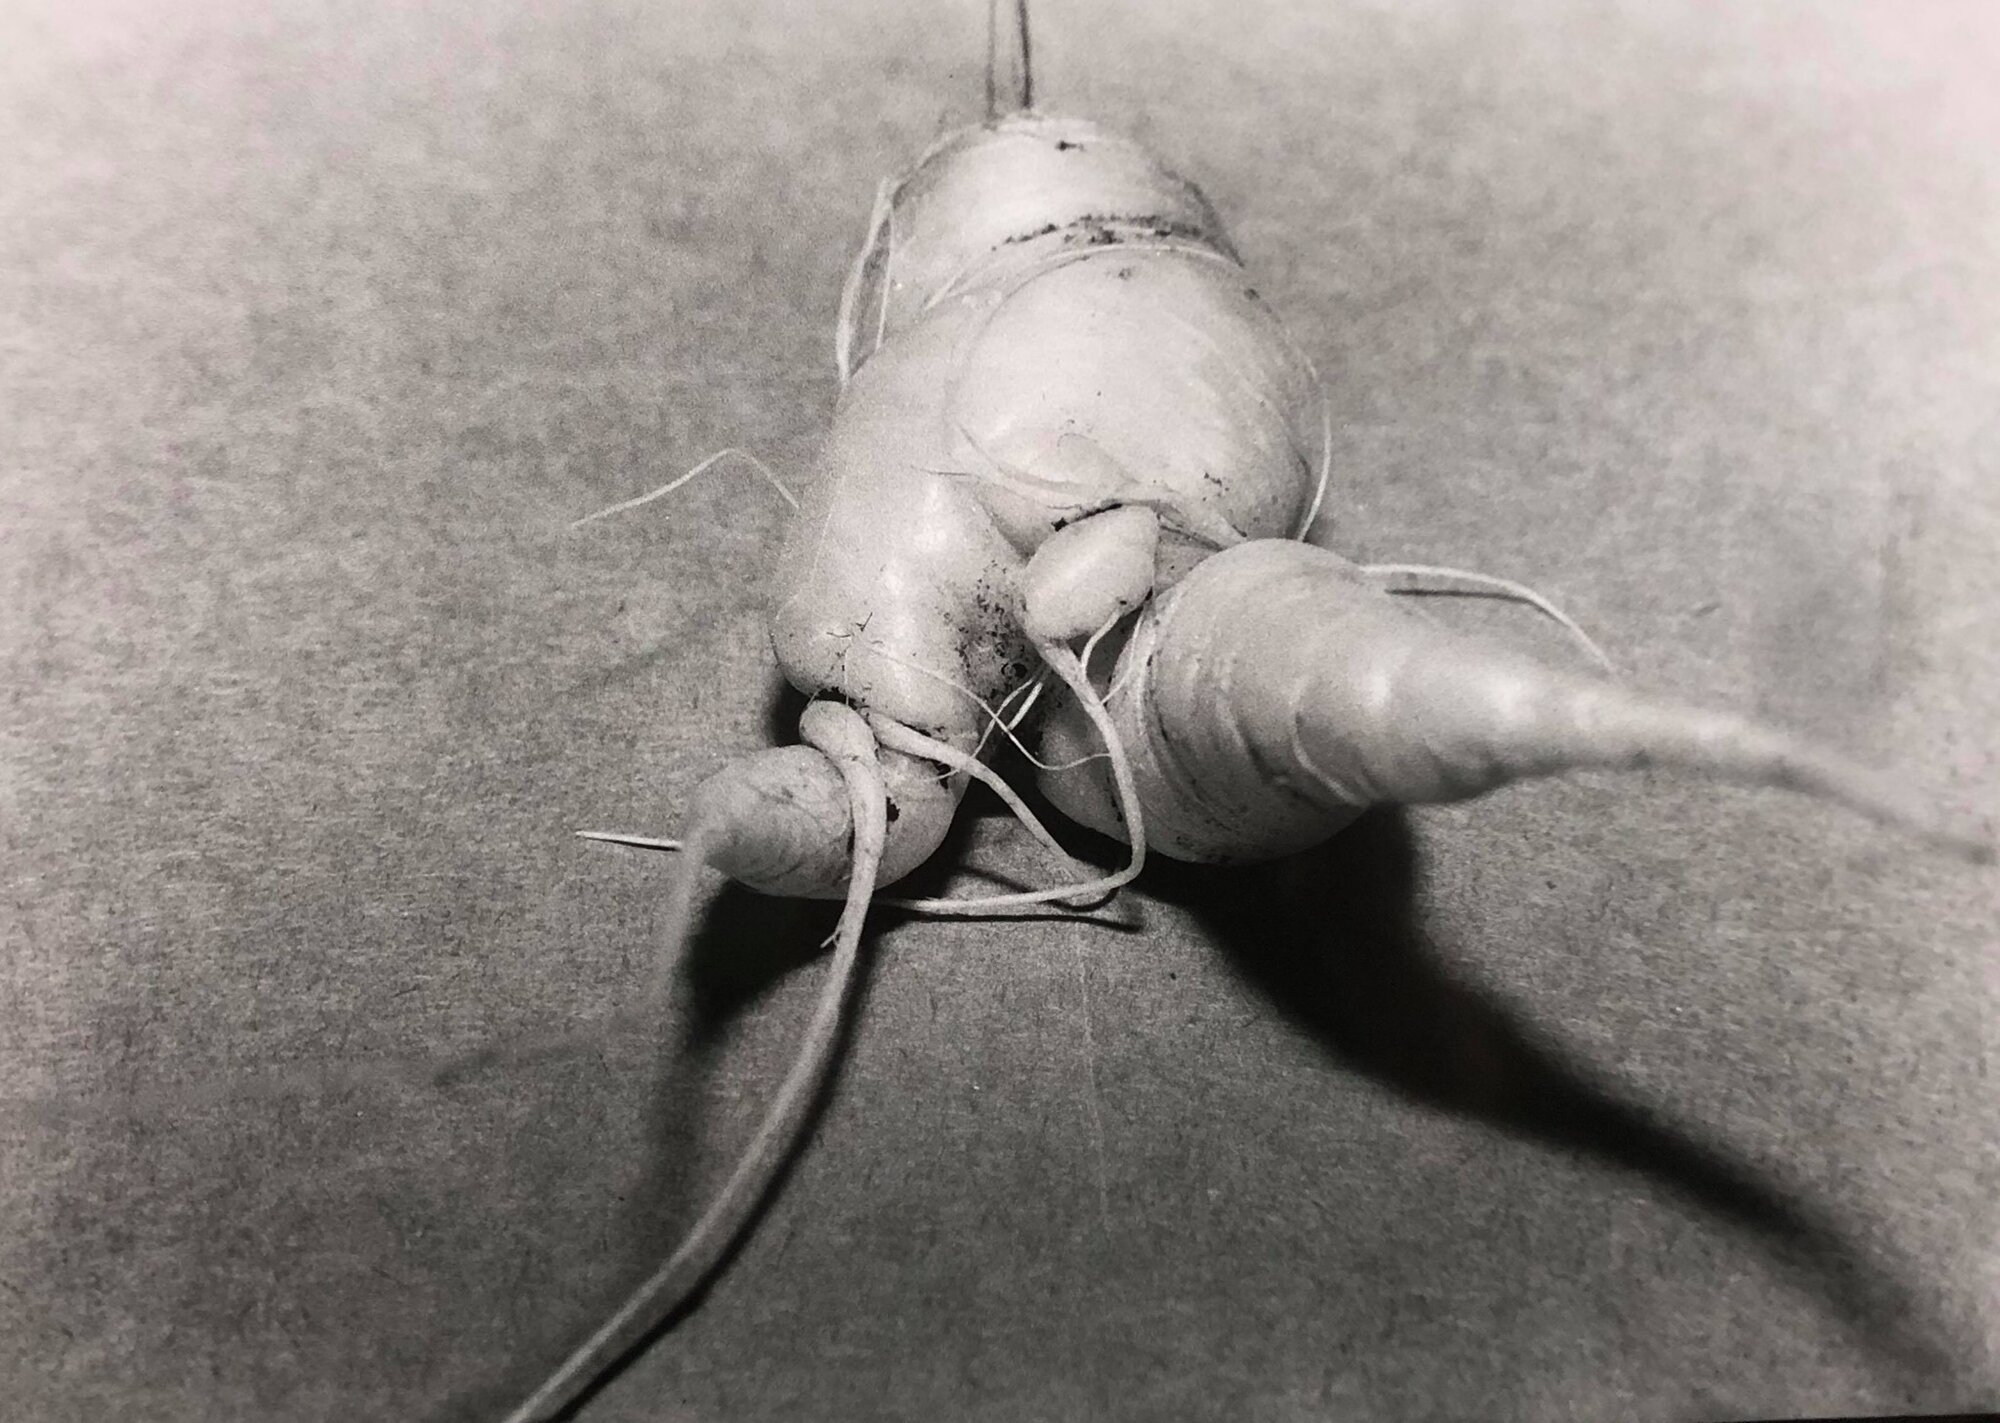 Carrot spredding here legs (photo, 2020). Detail of photograph by Pasenau.